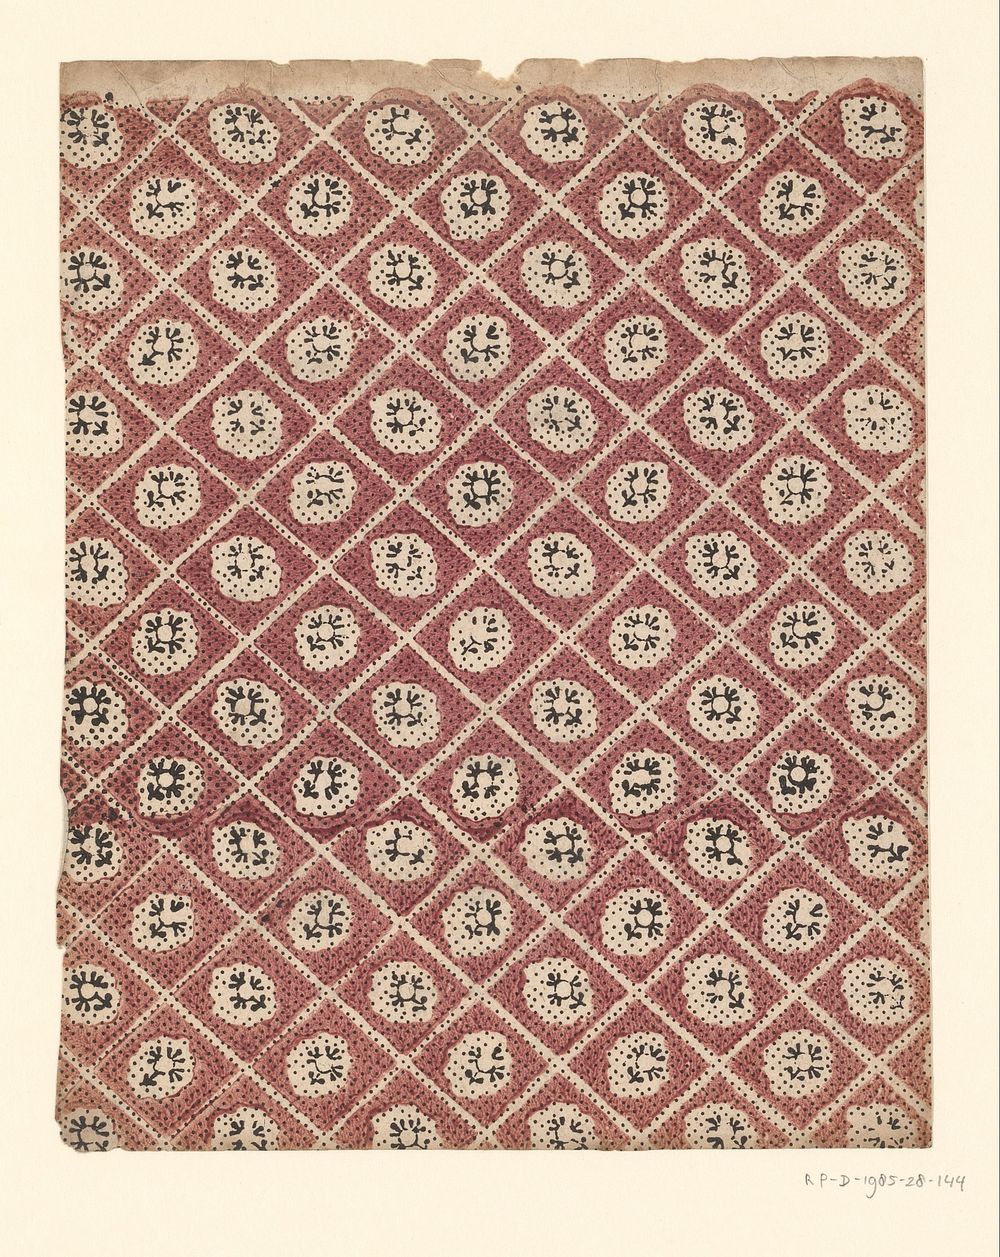 Blad met ruitenpatroon met bloem als veldvulling en puntenfond (1750 - 1900) by anonymous